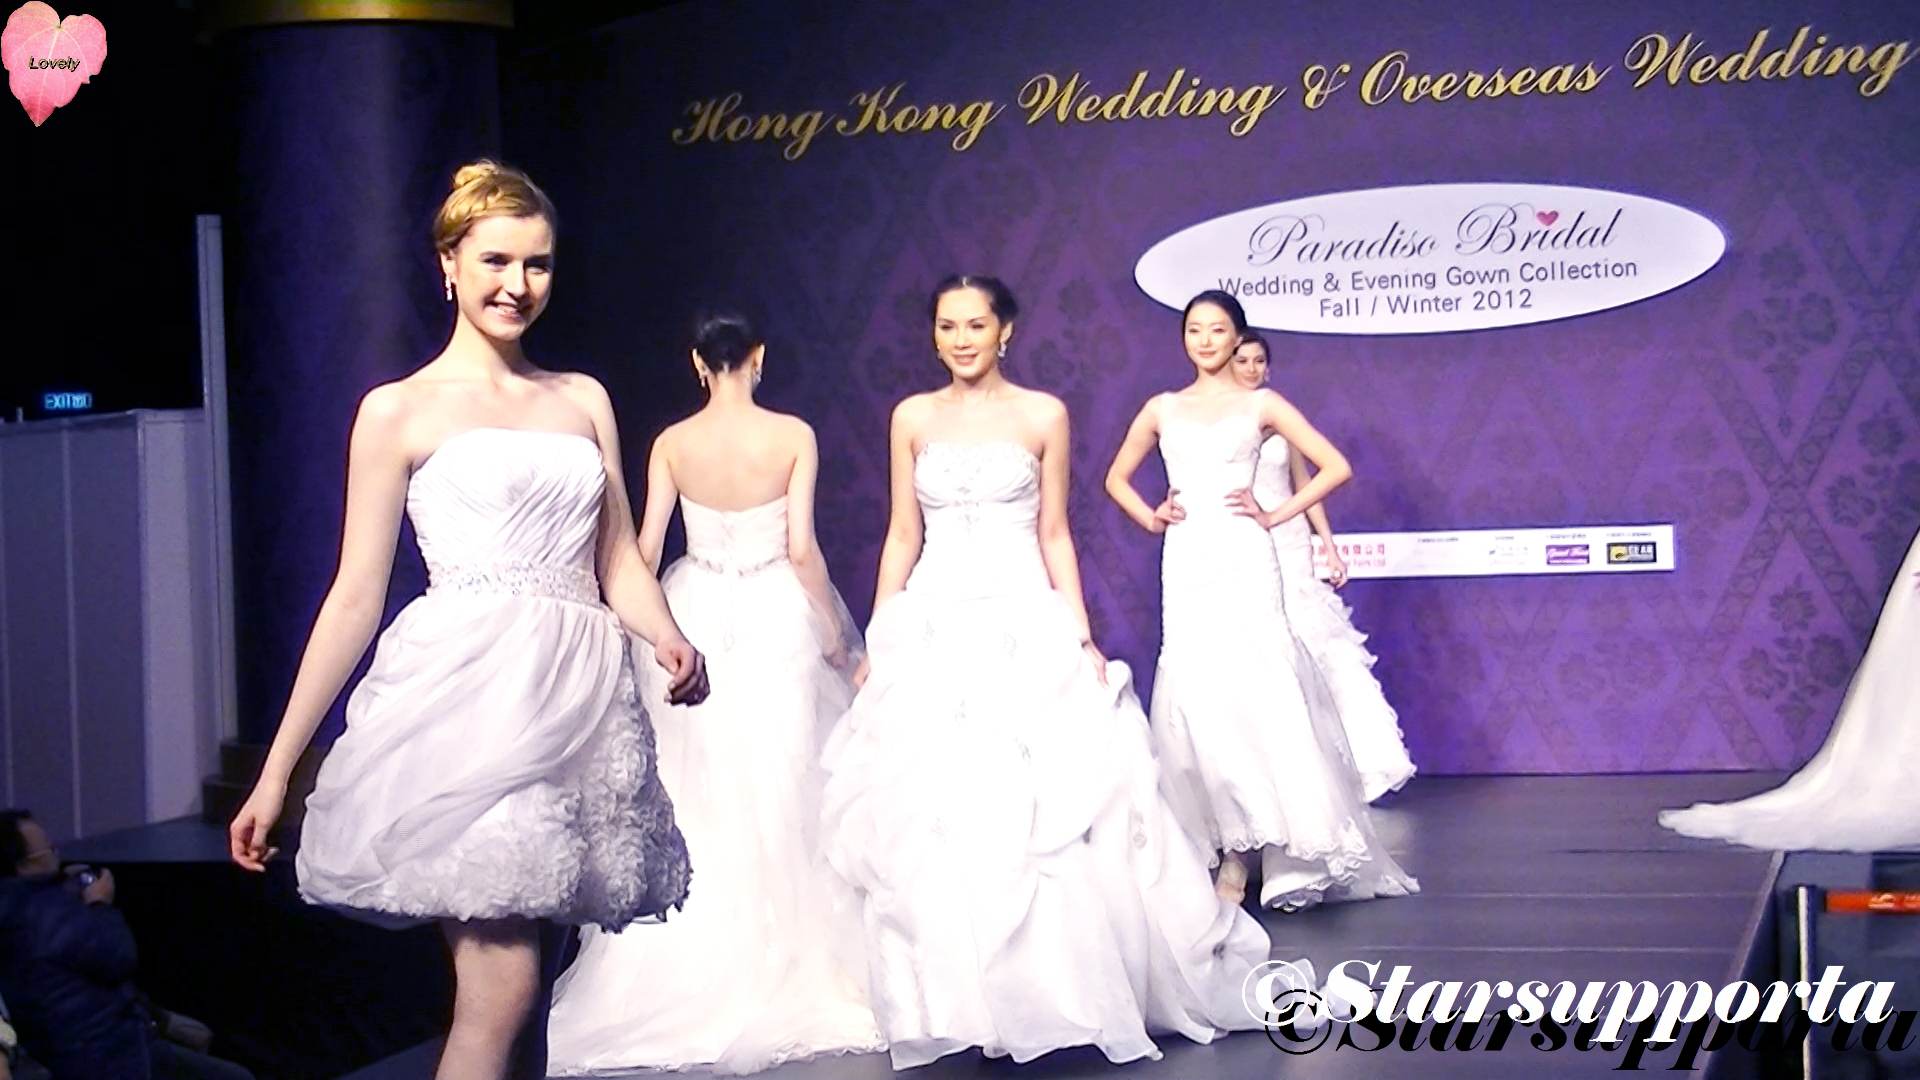 20120311 Hong Kong Wedding & Overseas Wedding Expo - Paradiso Bridal: Wedding & Evening Gown Collection Fall Winter 2012 @ 香港會議展覽中心 HKCEC (video)